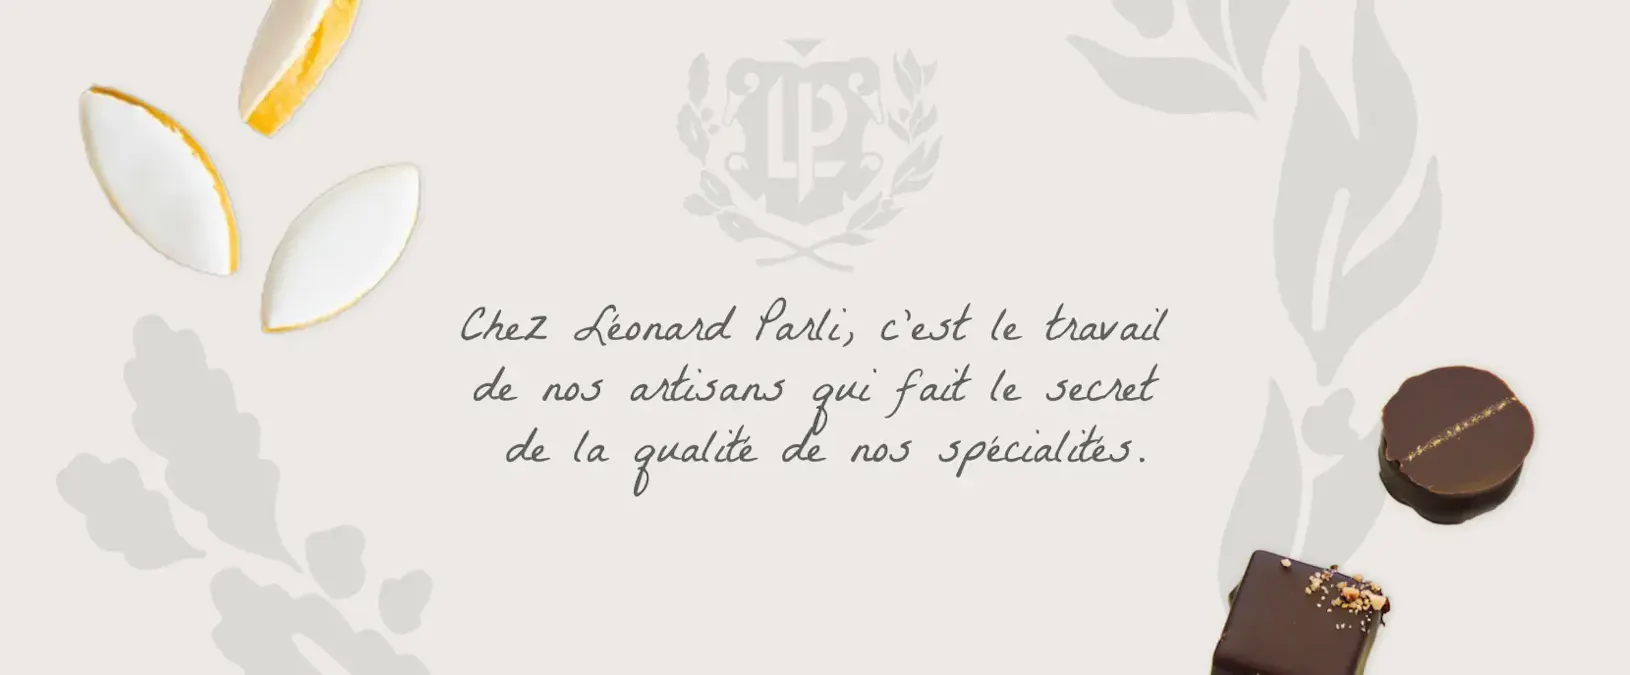 Citation de Léonard Parli - Site internet Shopify